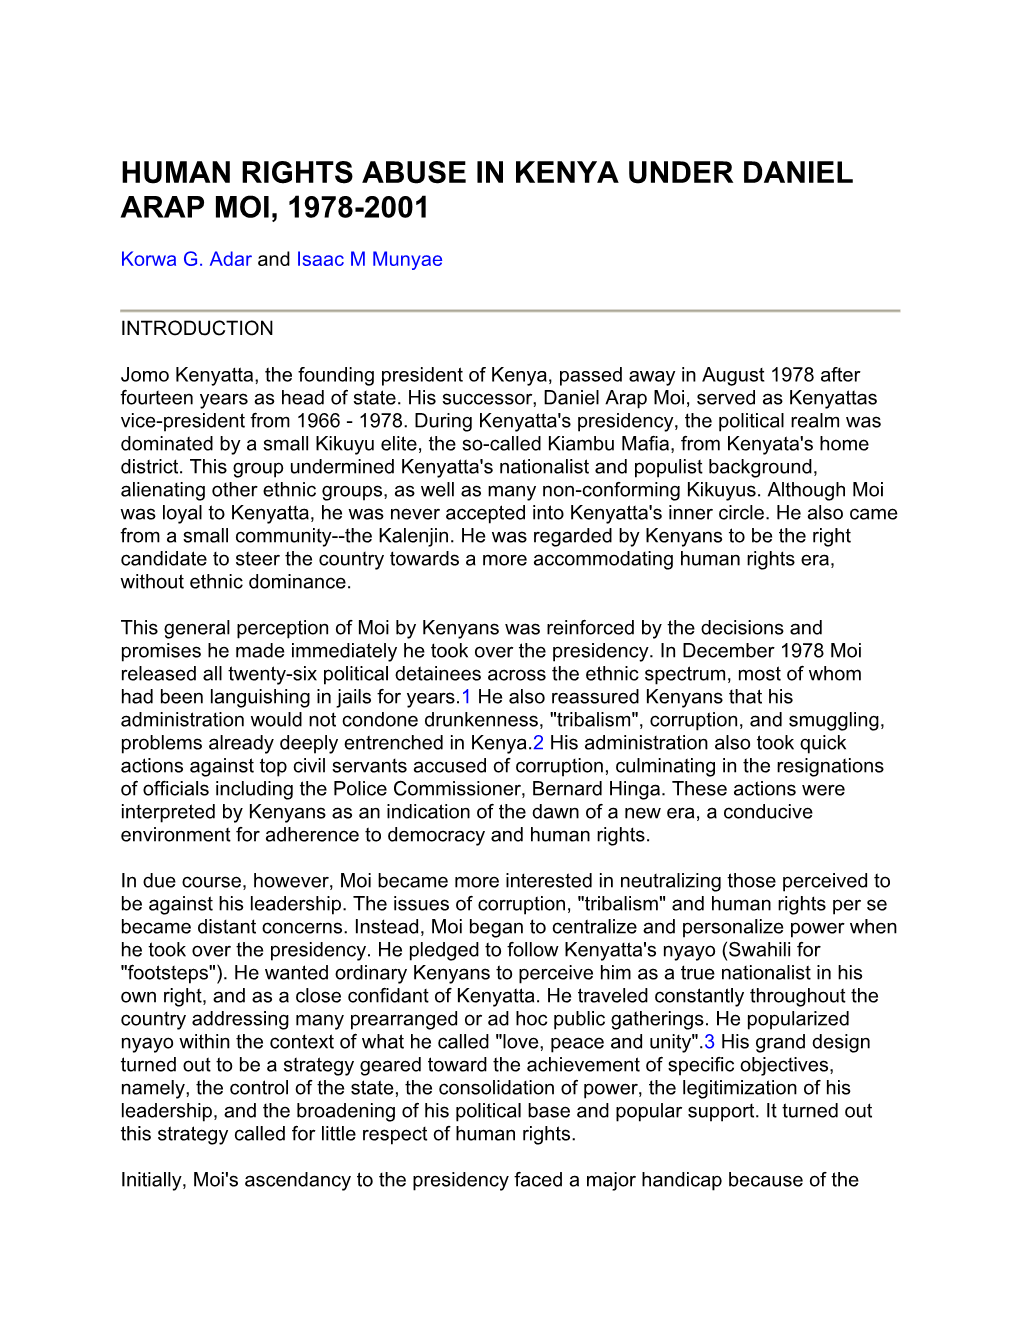 Human Rights Abuse in Kenya Under Daniel Arap Moi, 1978-2001